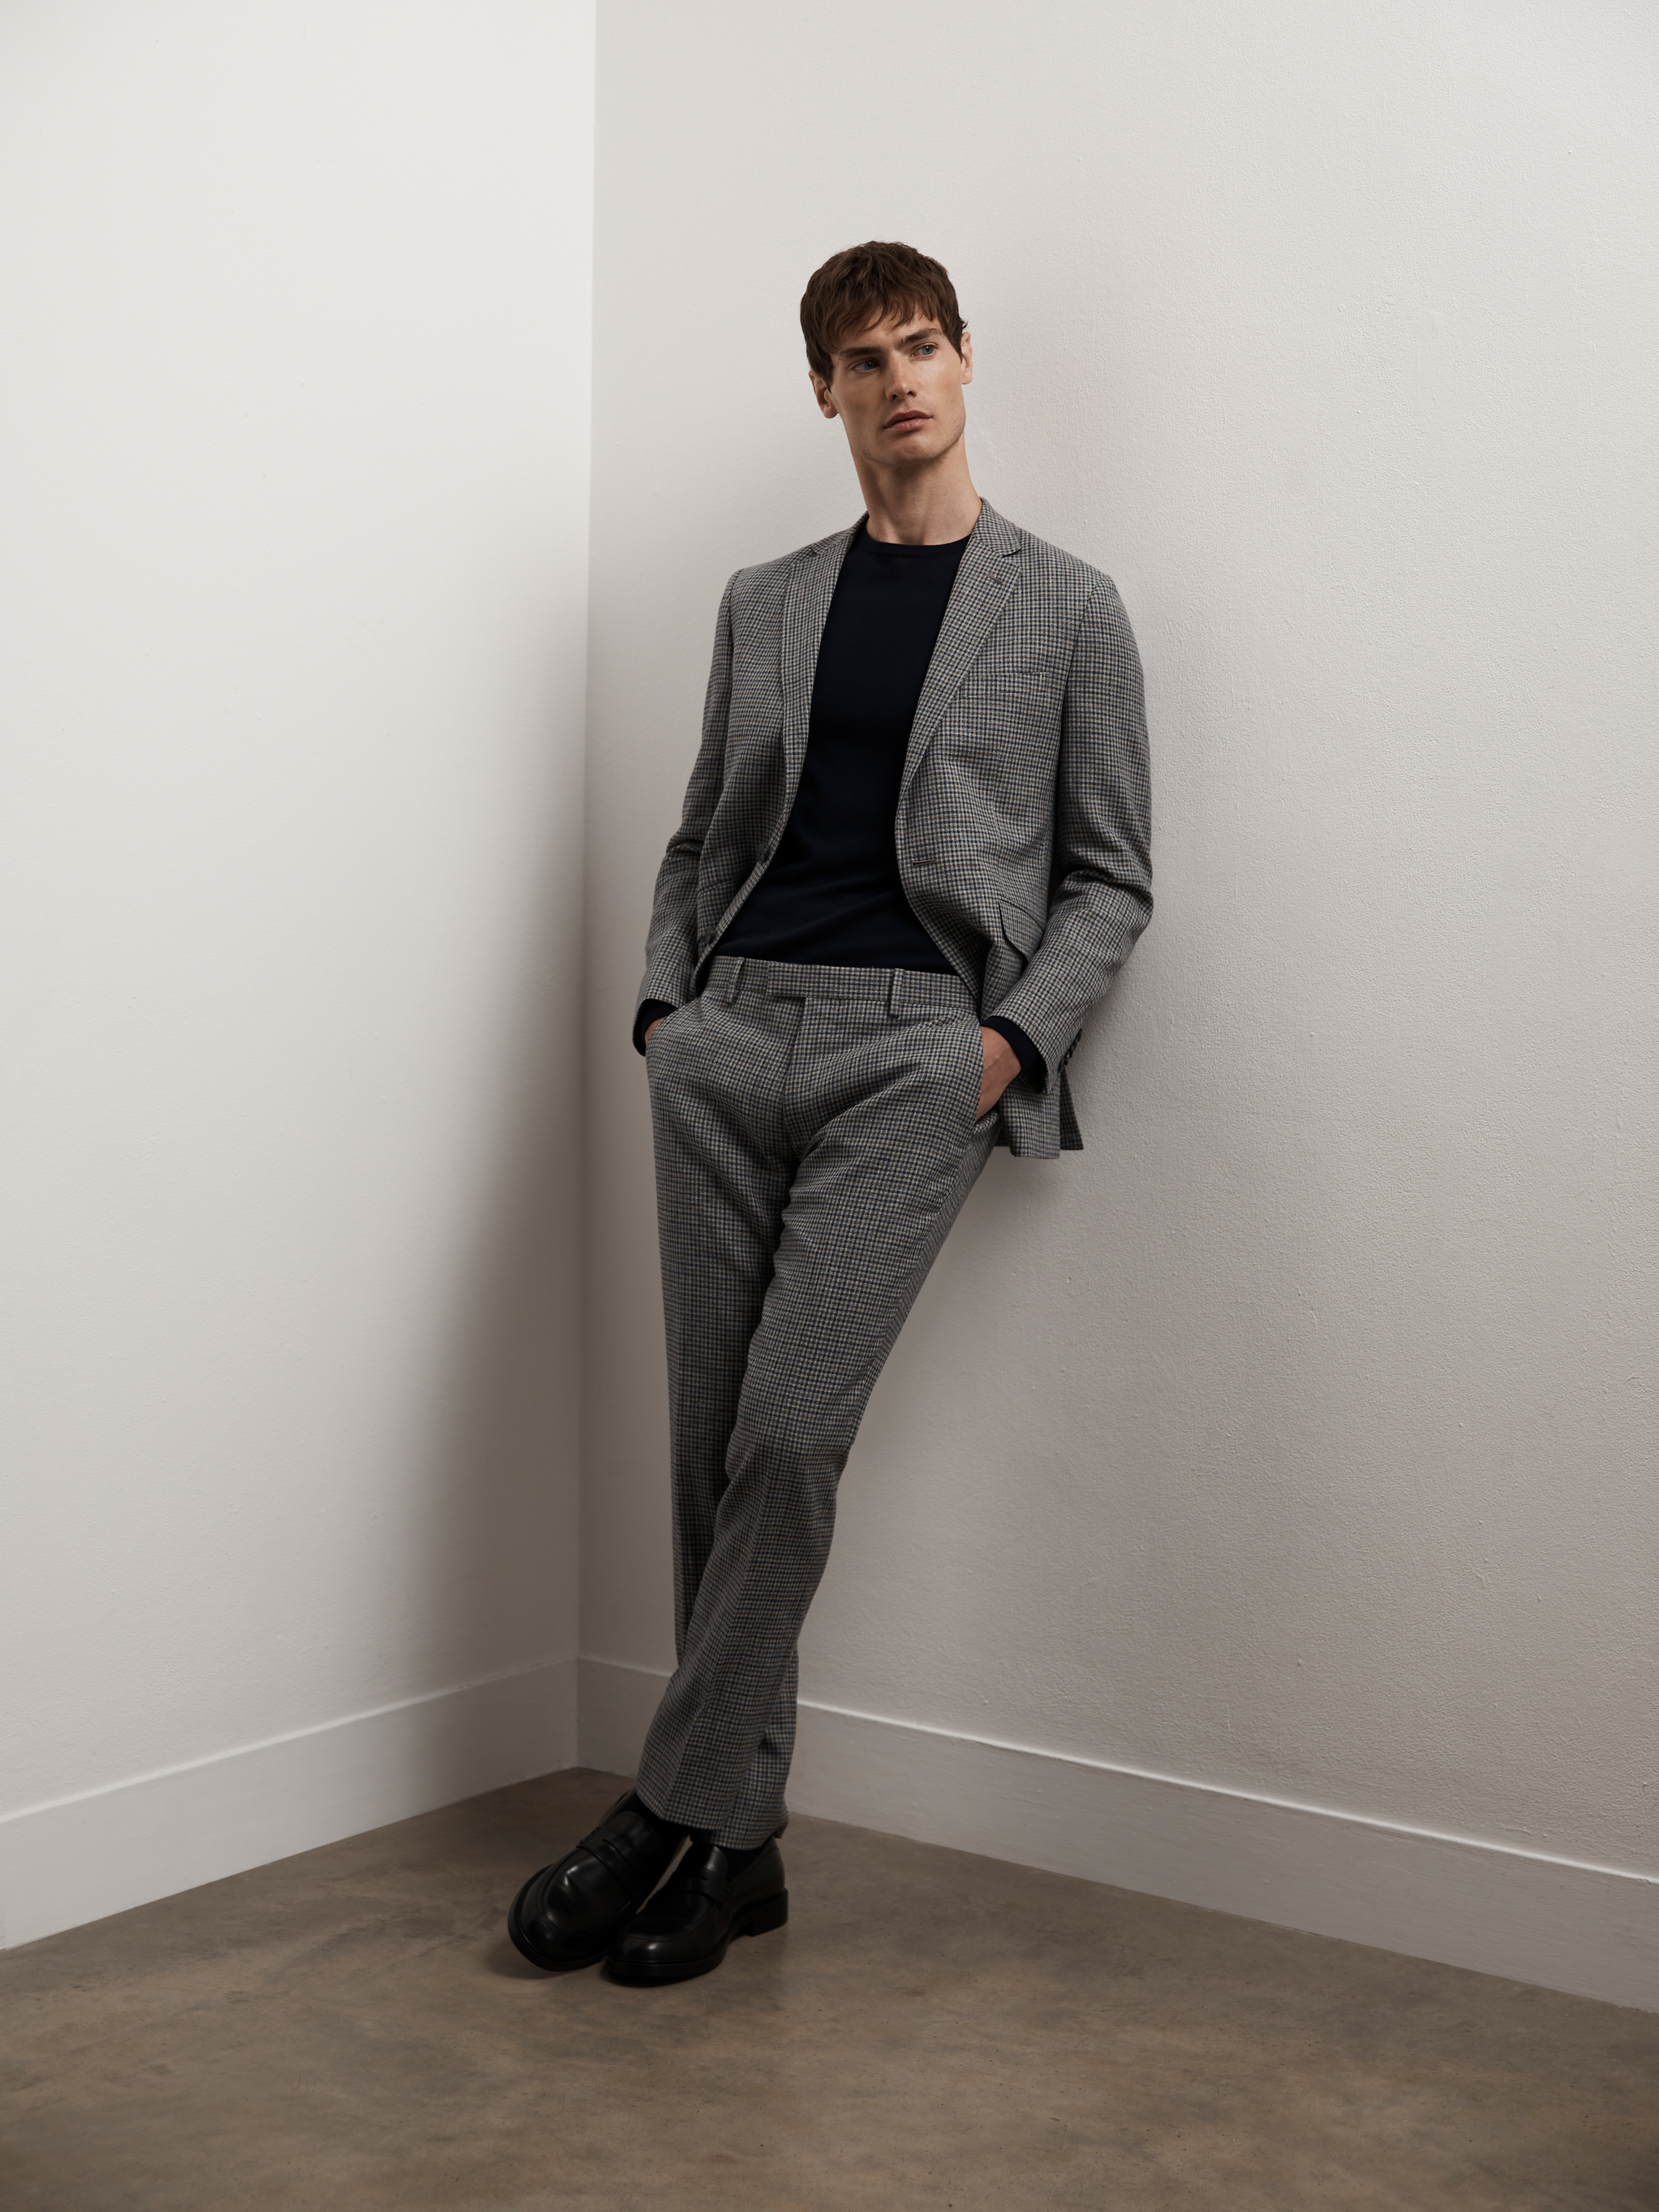 BRUNELLO CUCINELLI wool trousers 'Italian Fit' light grey | BRAUN Hamburg